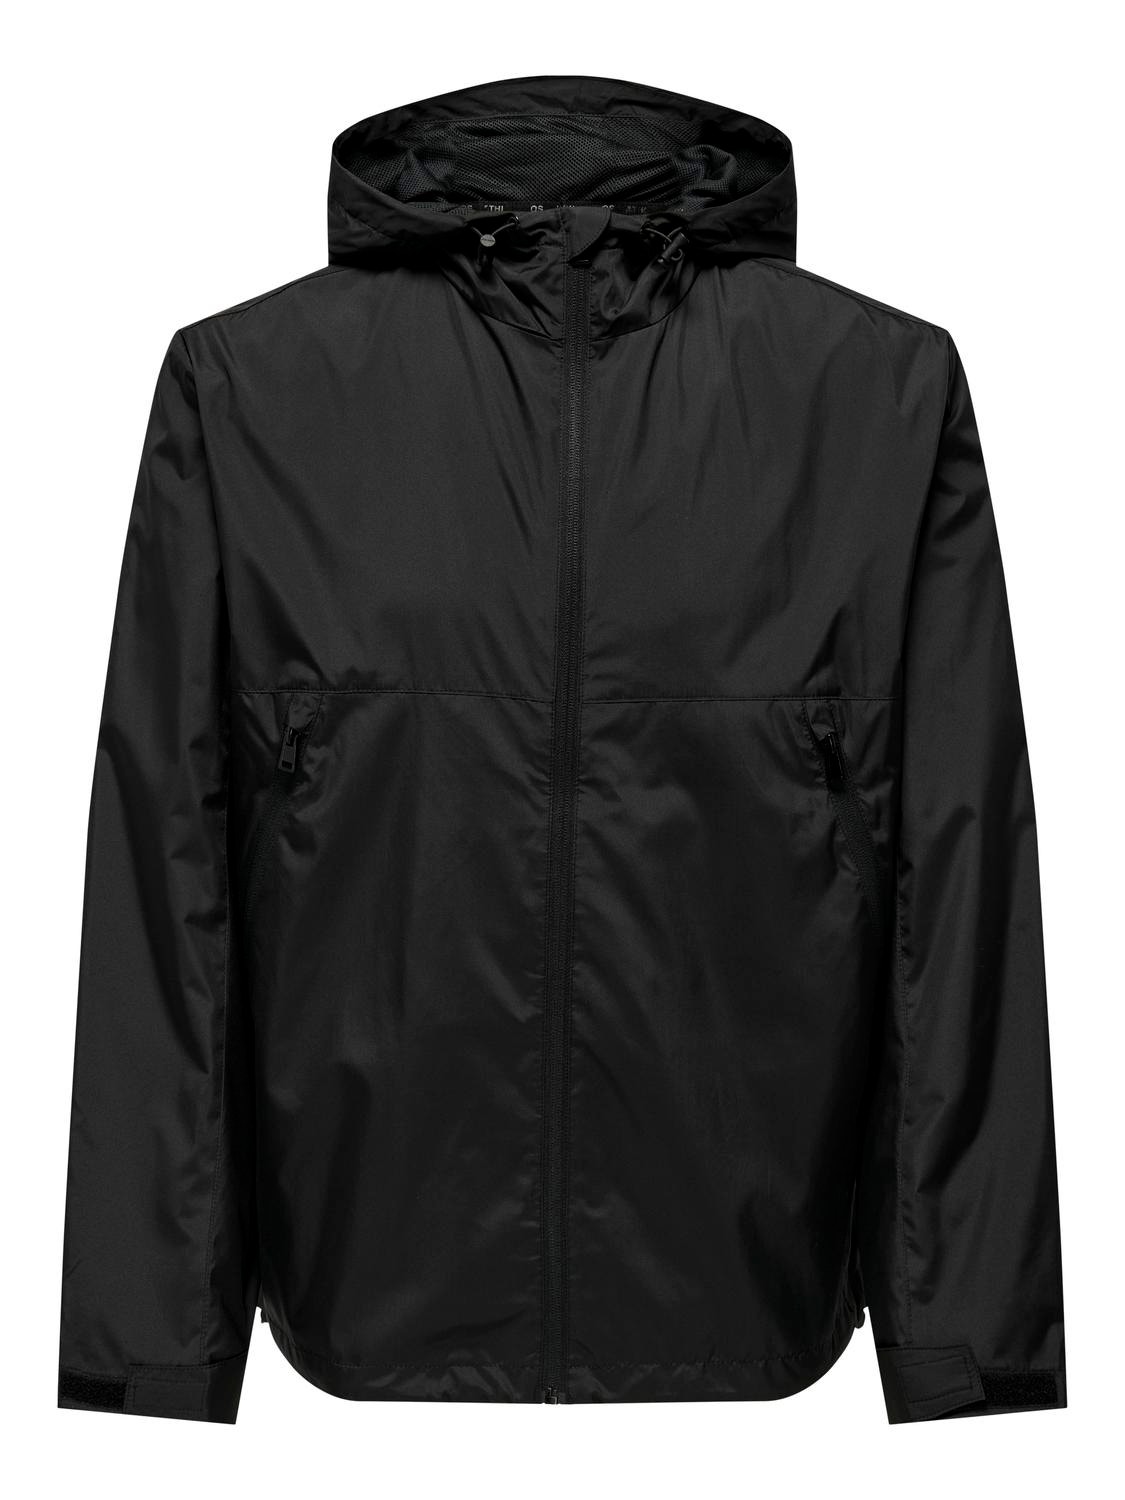 ONLY & SONS Hood with string regulation Jacket -Black - 22027659